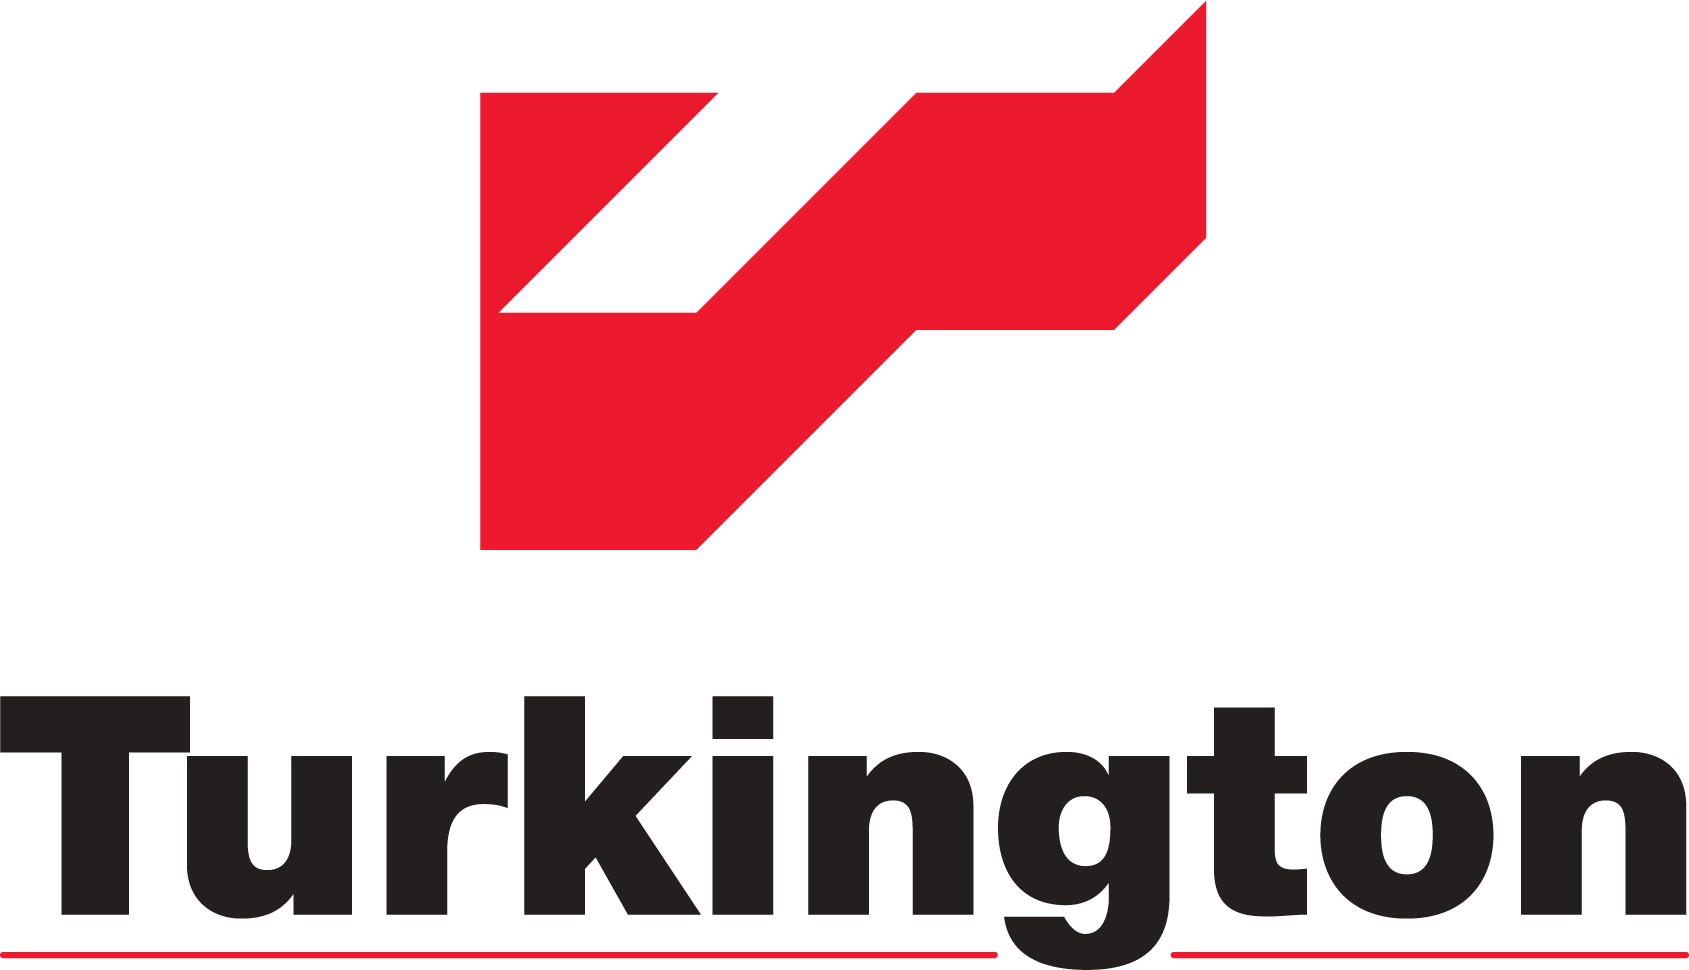 Turkington Construction - Site Safety, Health, Environmental and Welfare Inspection